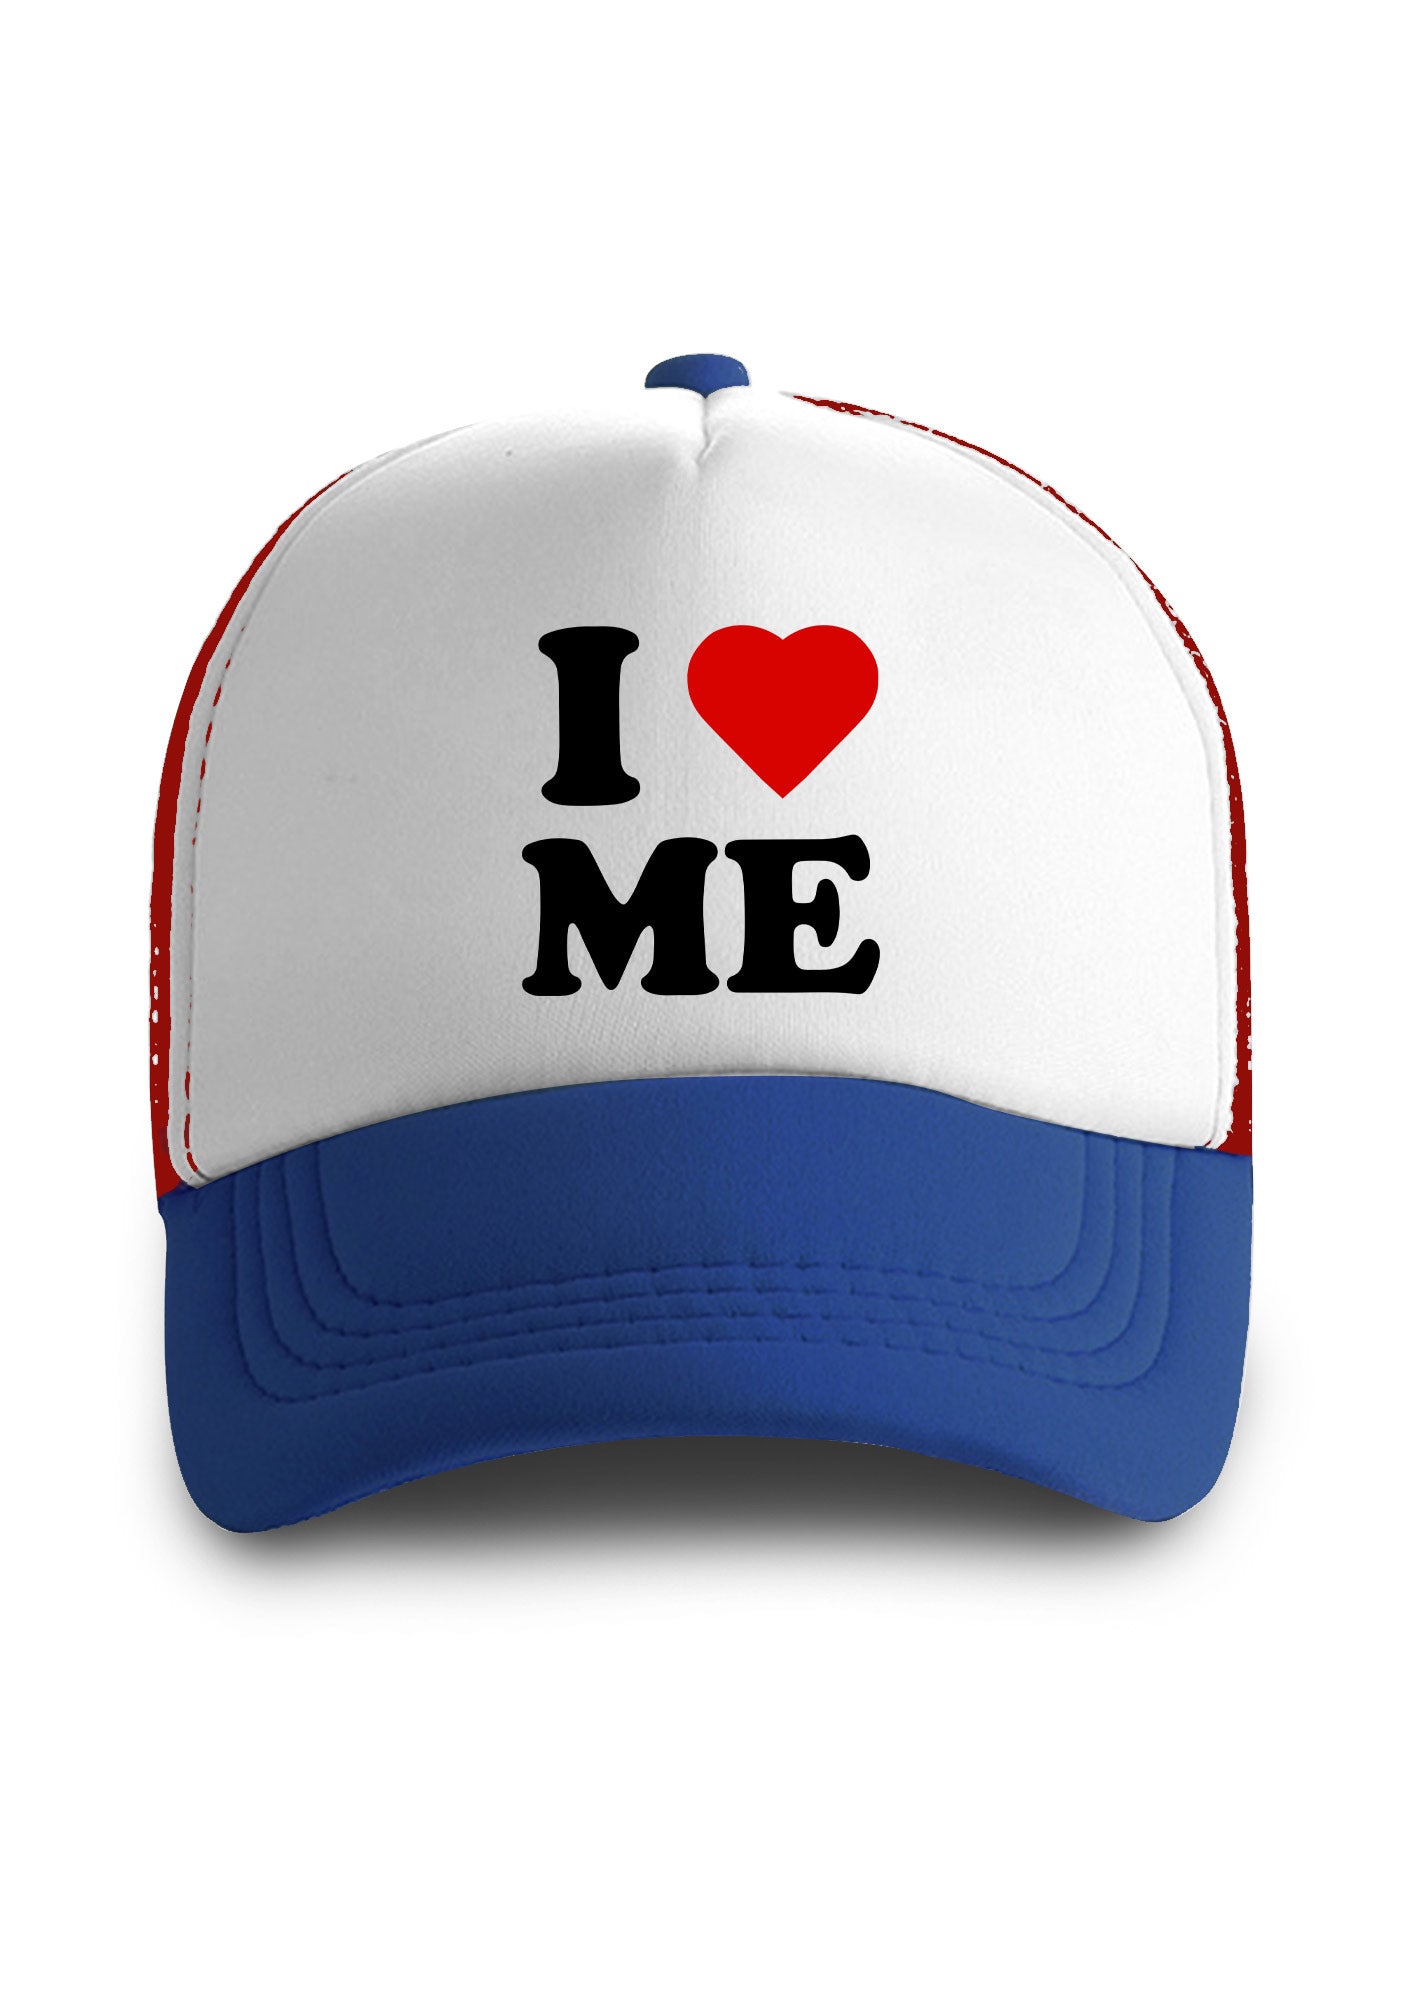 I Love Me Trucker Hat